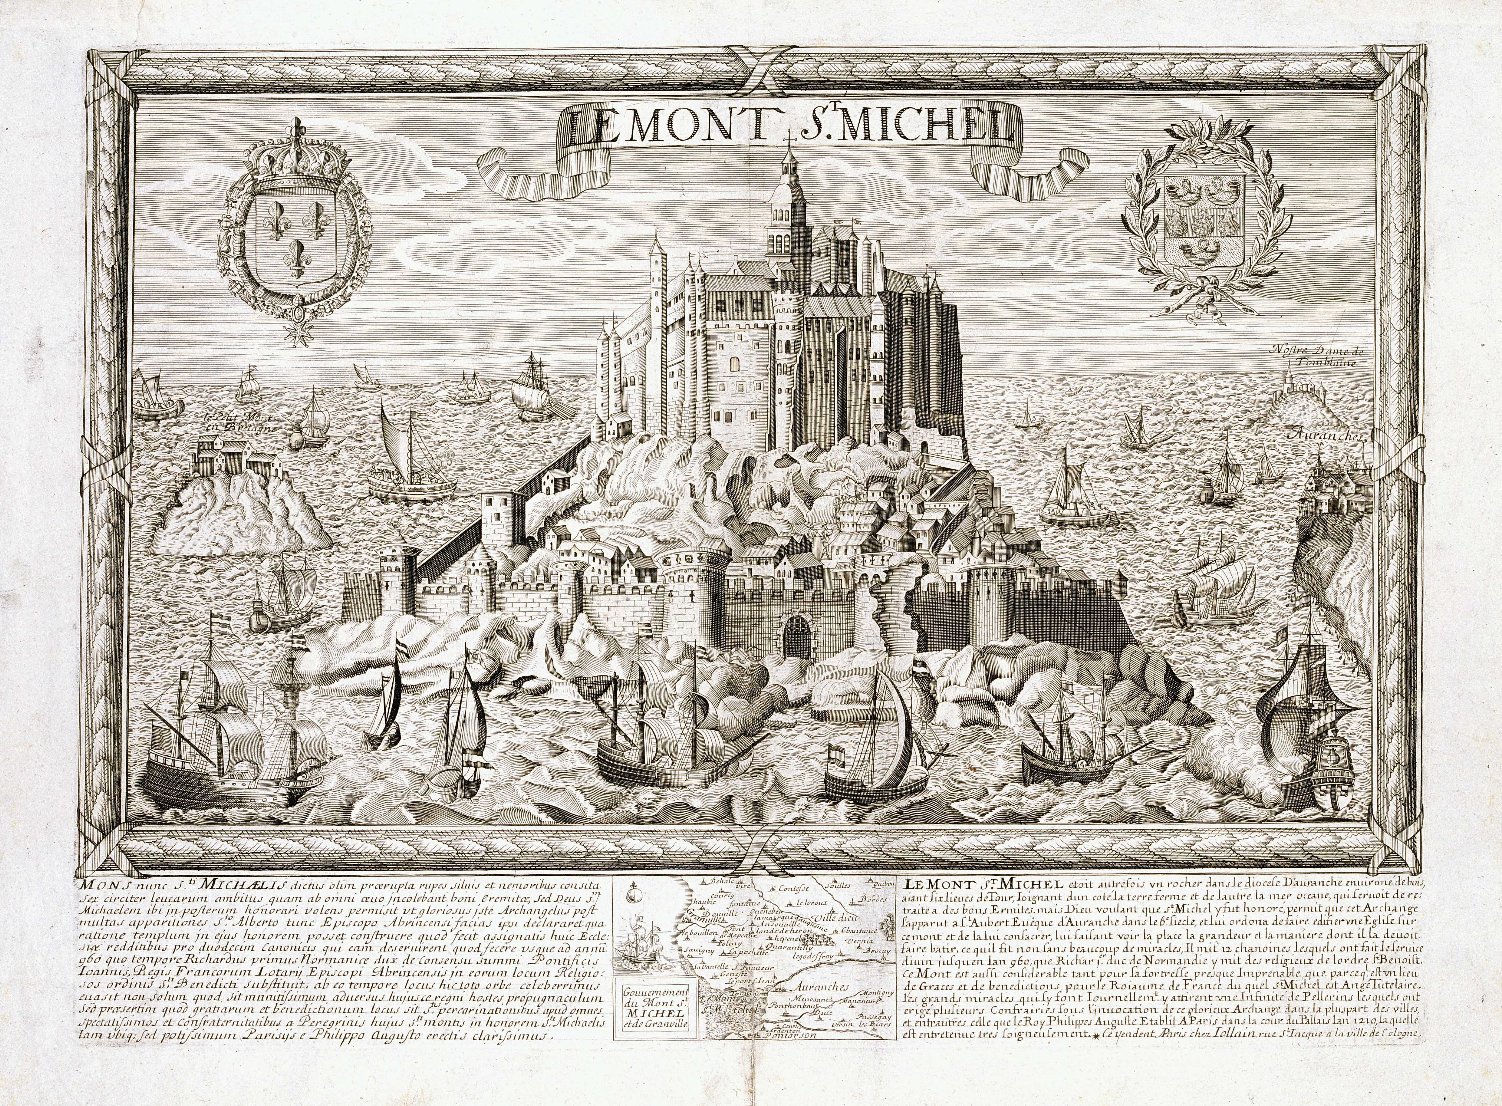 Archives départementales du Calvados, A view of Mont-Saint-Michel, 1640ca, by Jollain, available here
